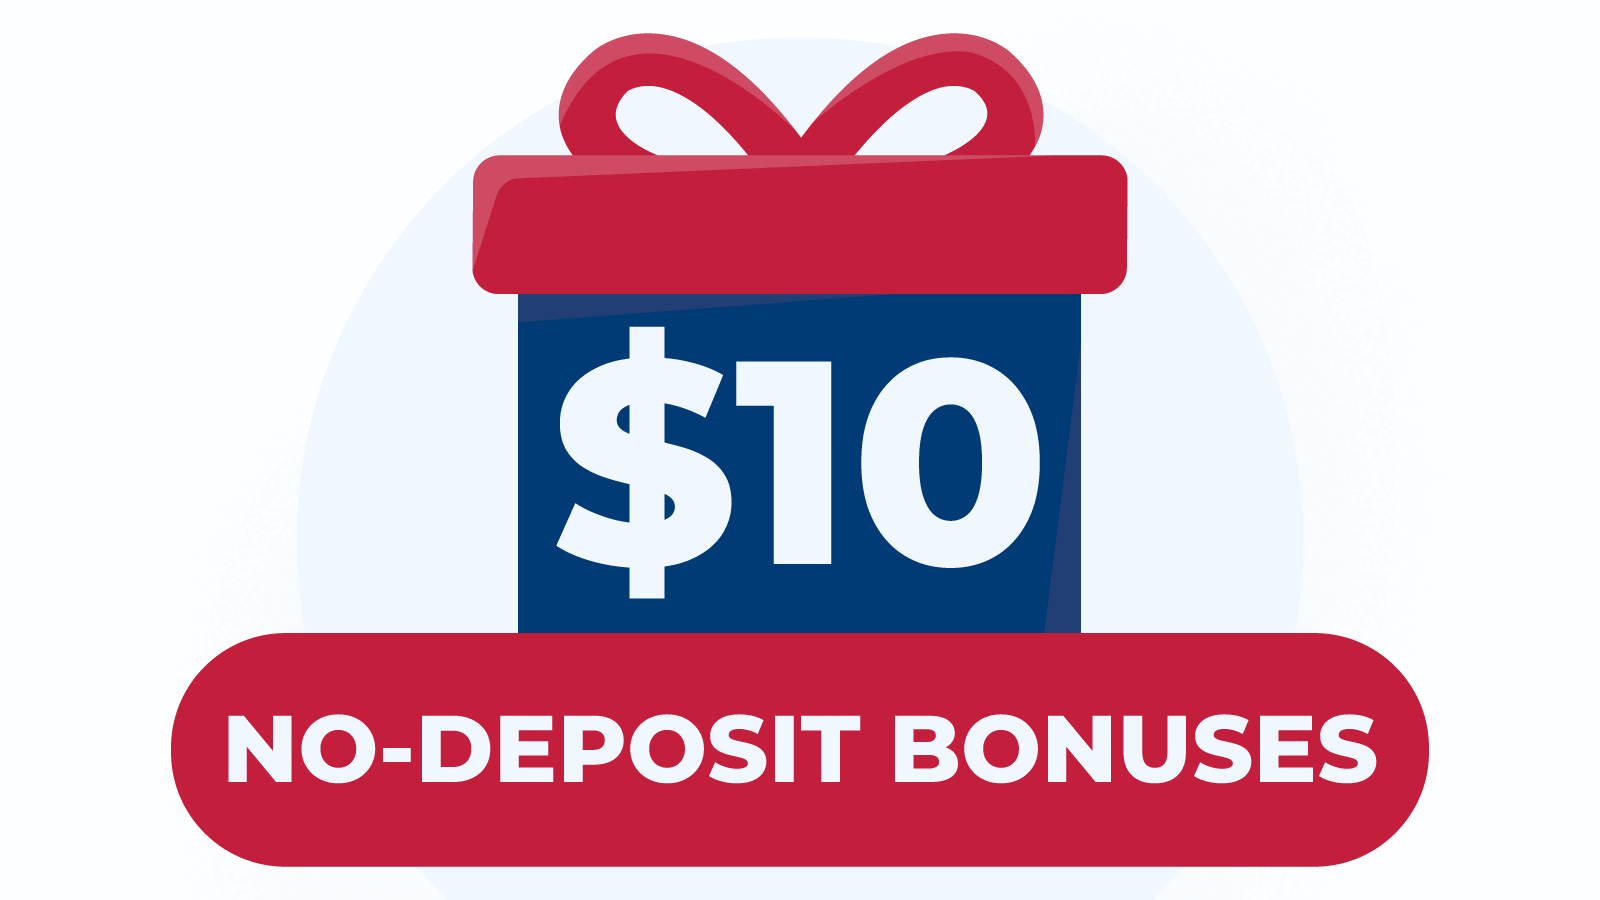 ¥10 no-deposit bonuses